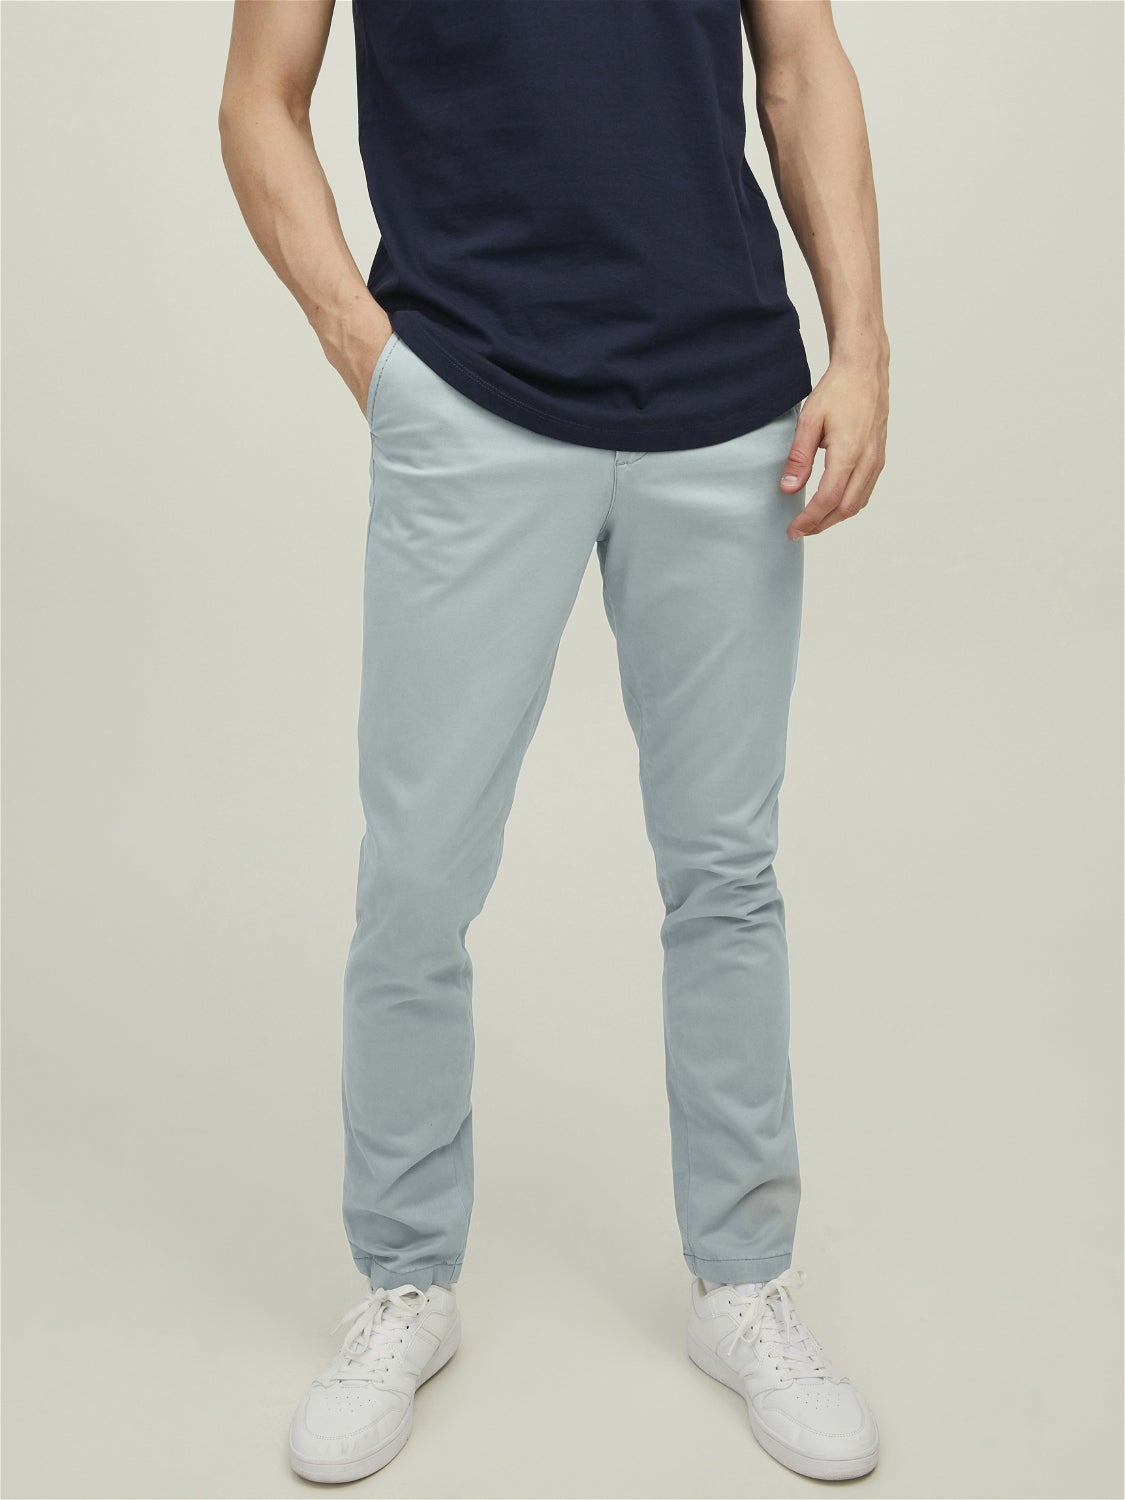 discount 56% MEN FASHION Trousers Shorts Jack & Jones slacks Blue XL 